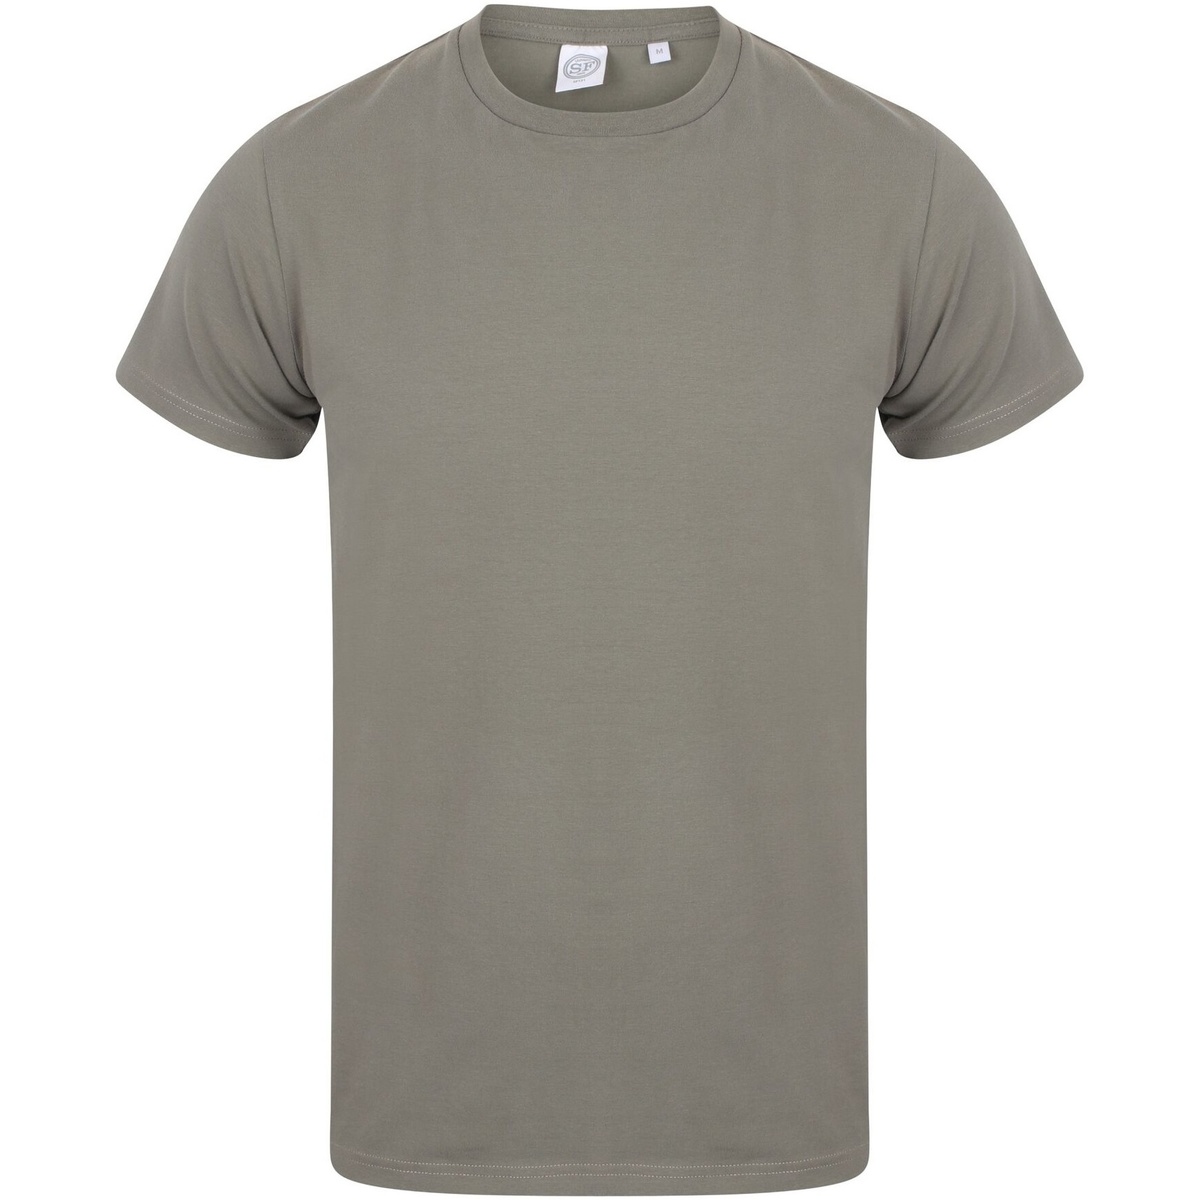 Vêtements Homme T-shirts manches courtes Skinni Fit SF121 Multicolore